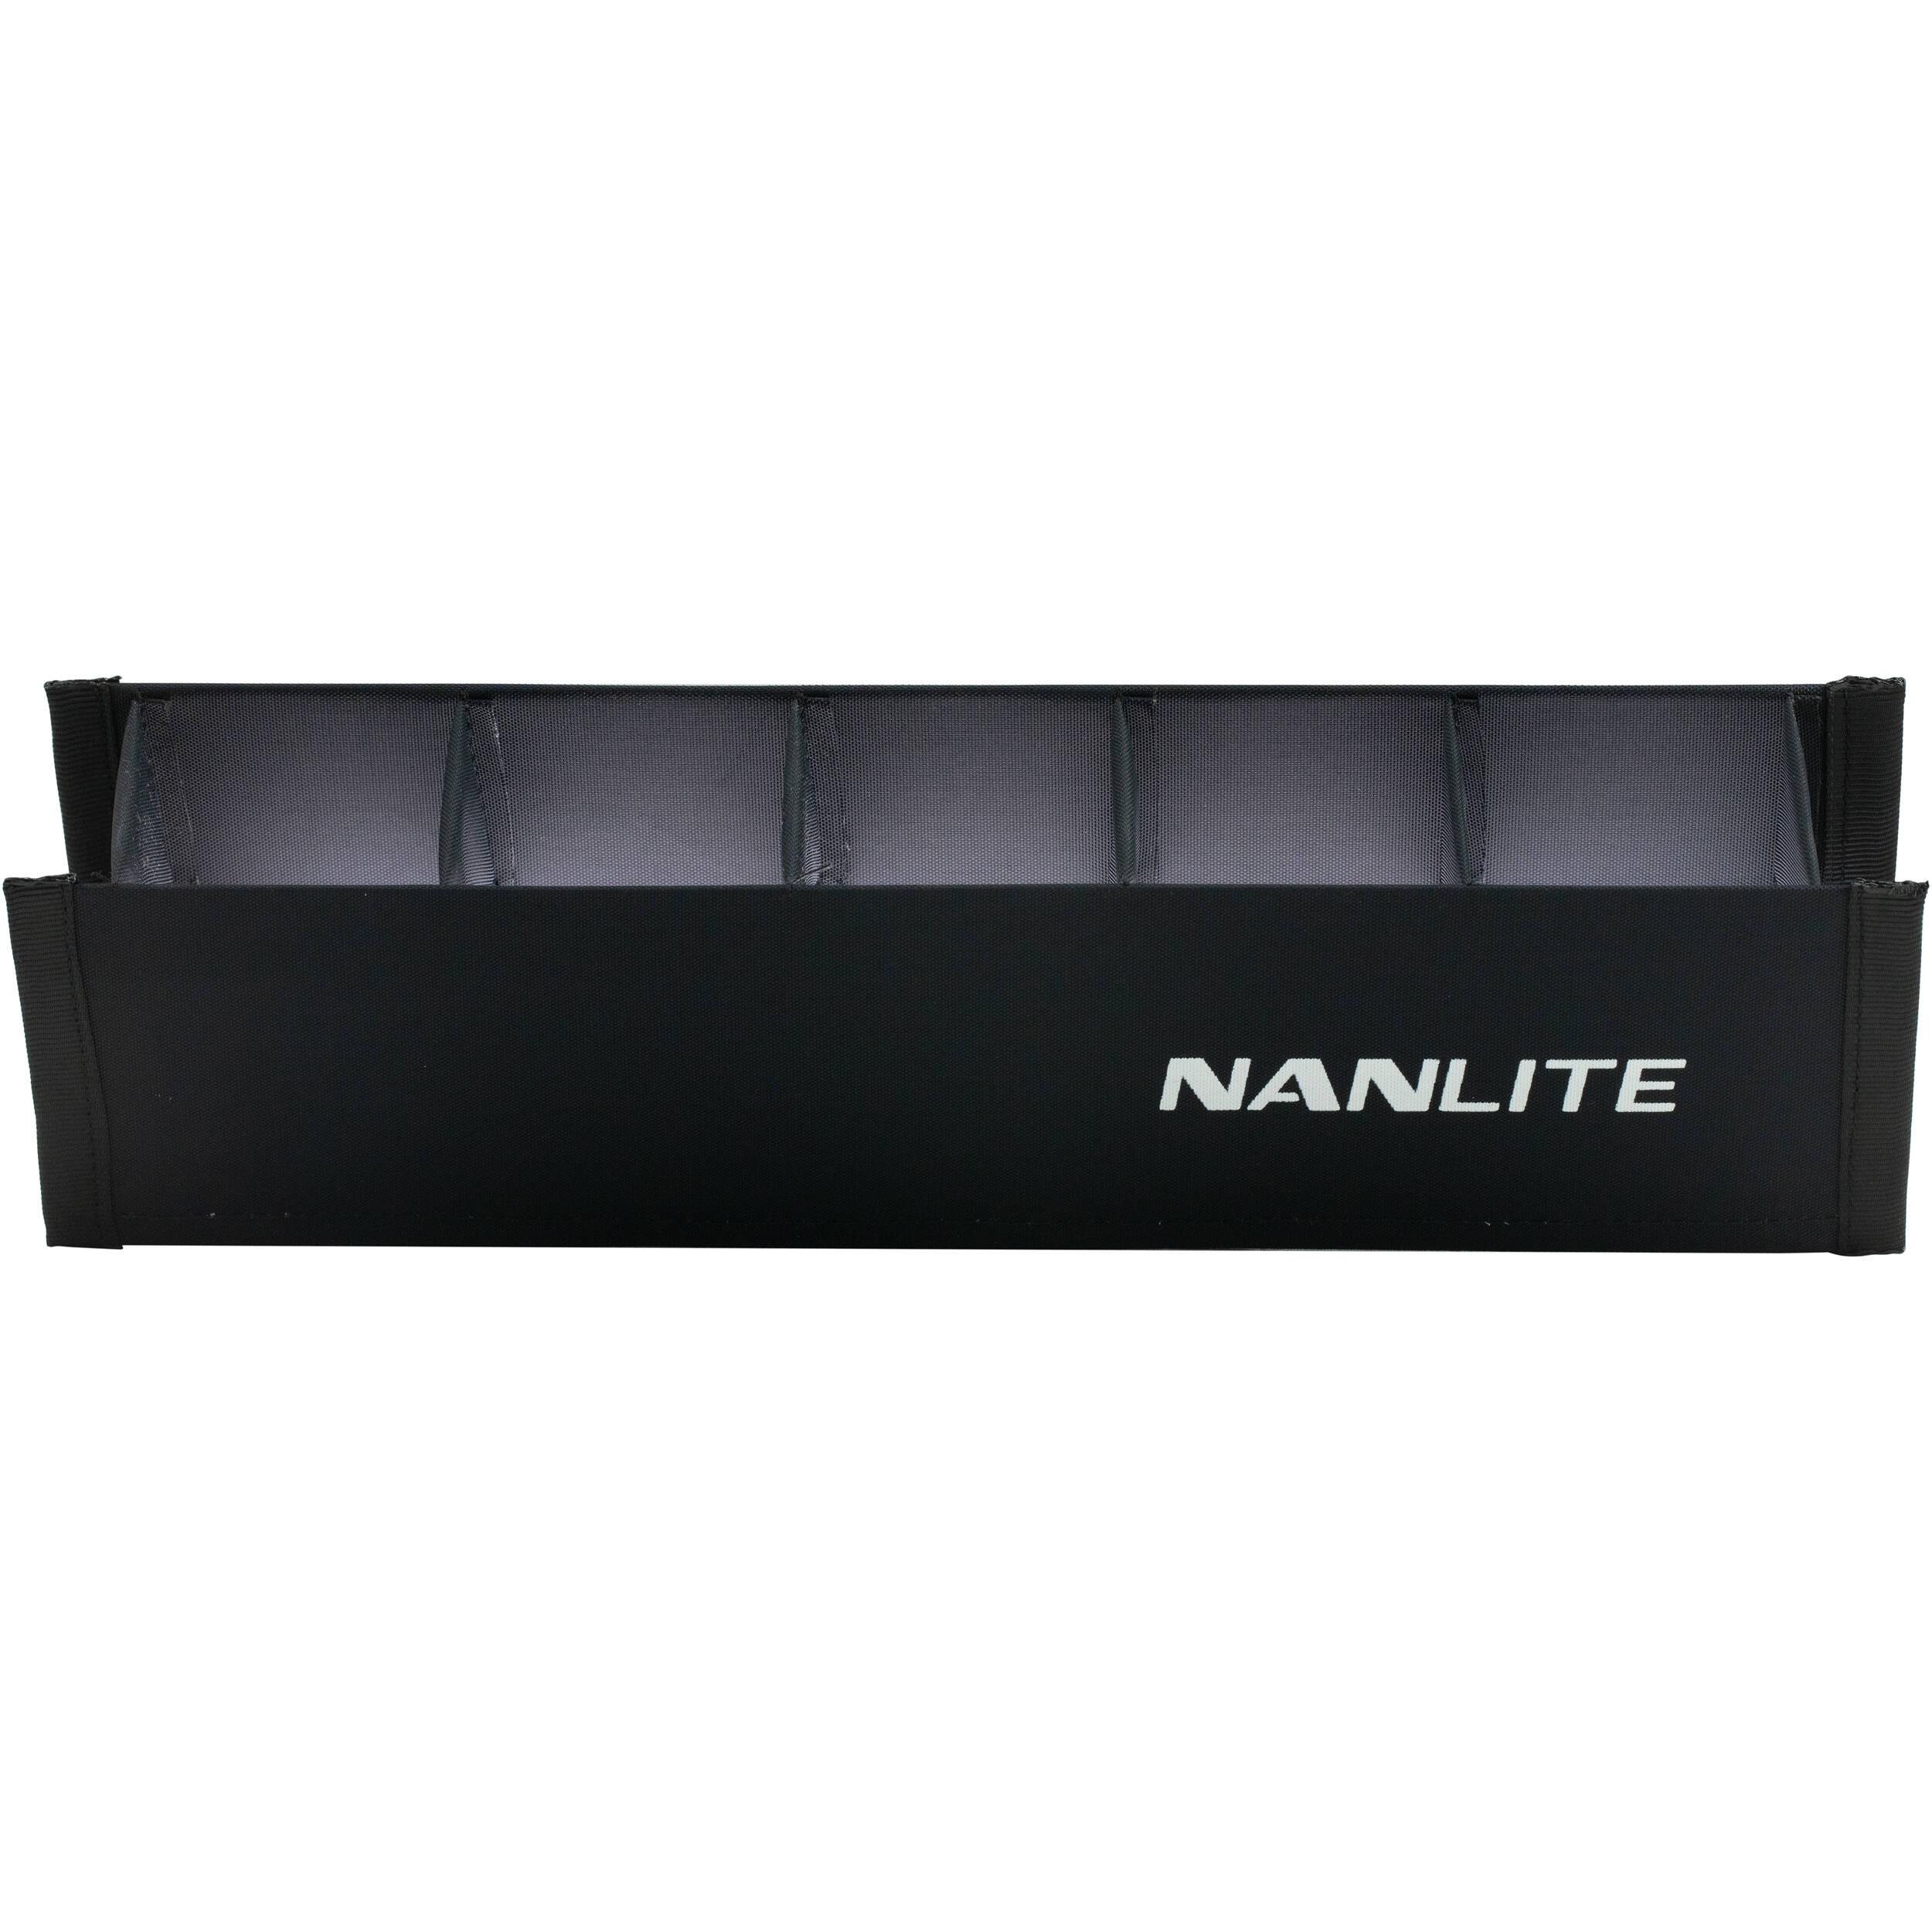 Nanlite Pavotube II 6C Grille de tissu